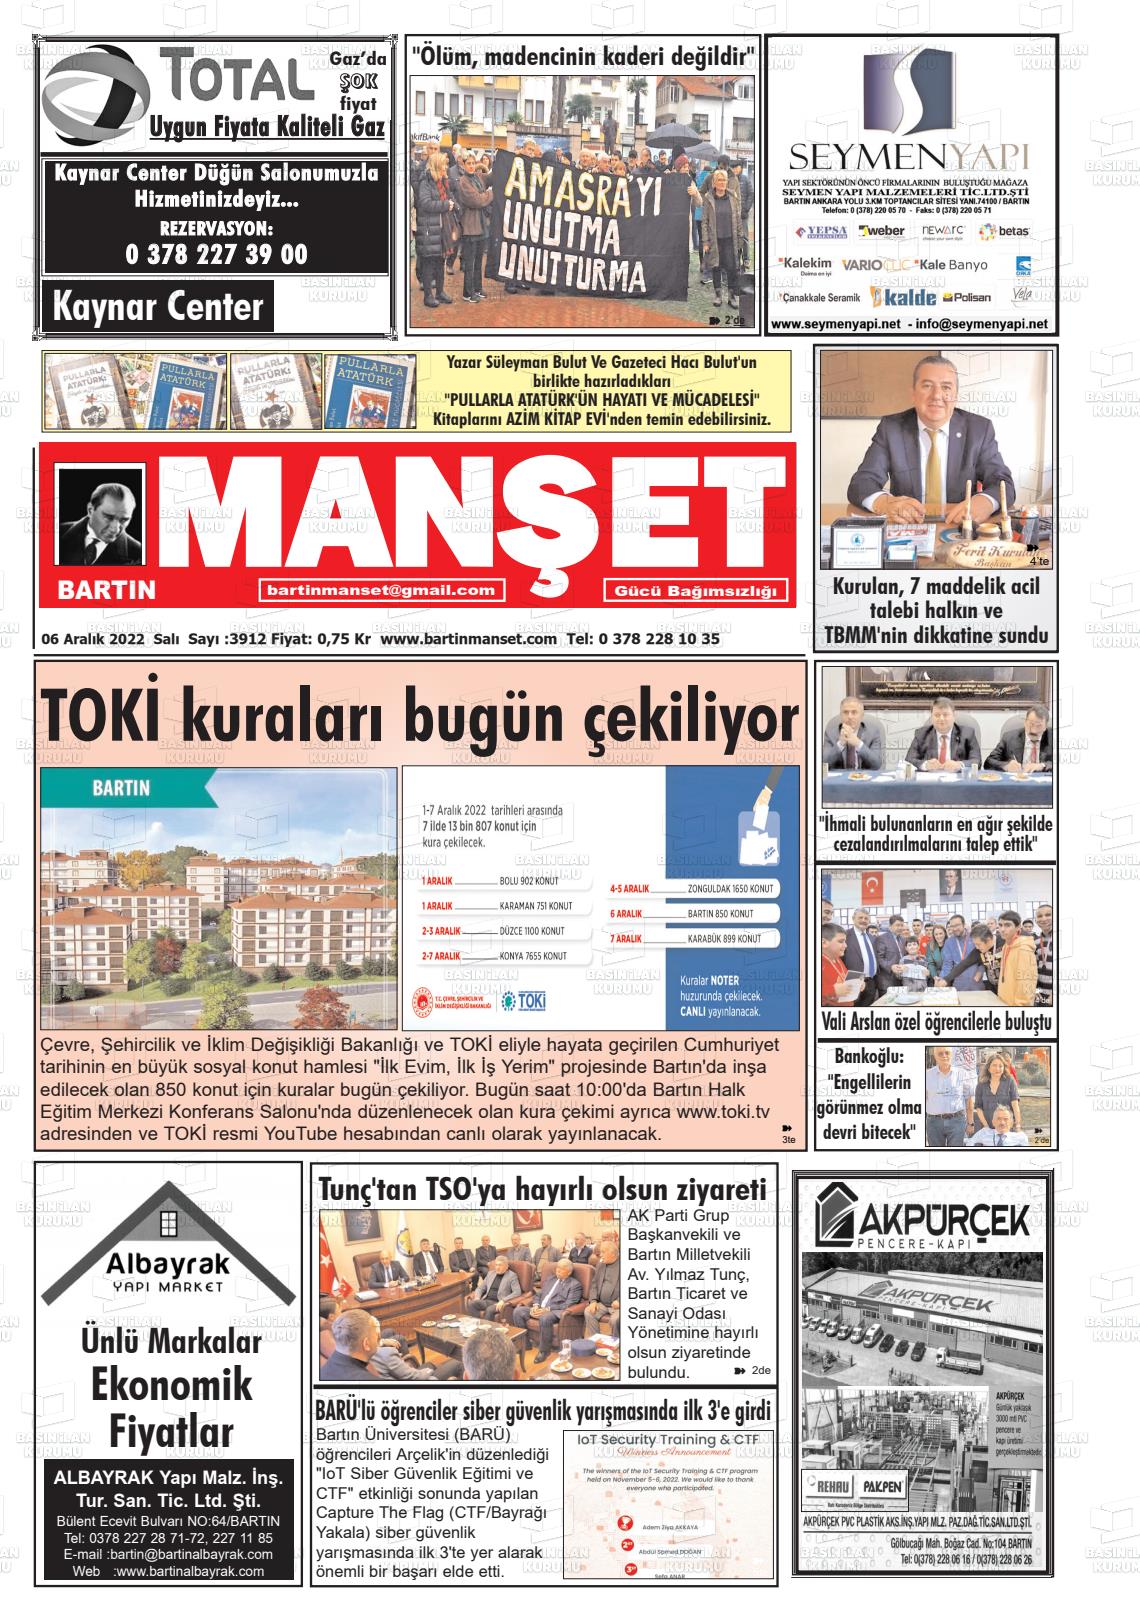 06 Aralık 2022 Bartın Manşet Gazete Manşeti